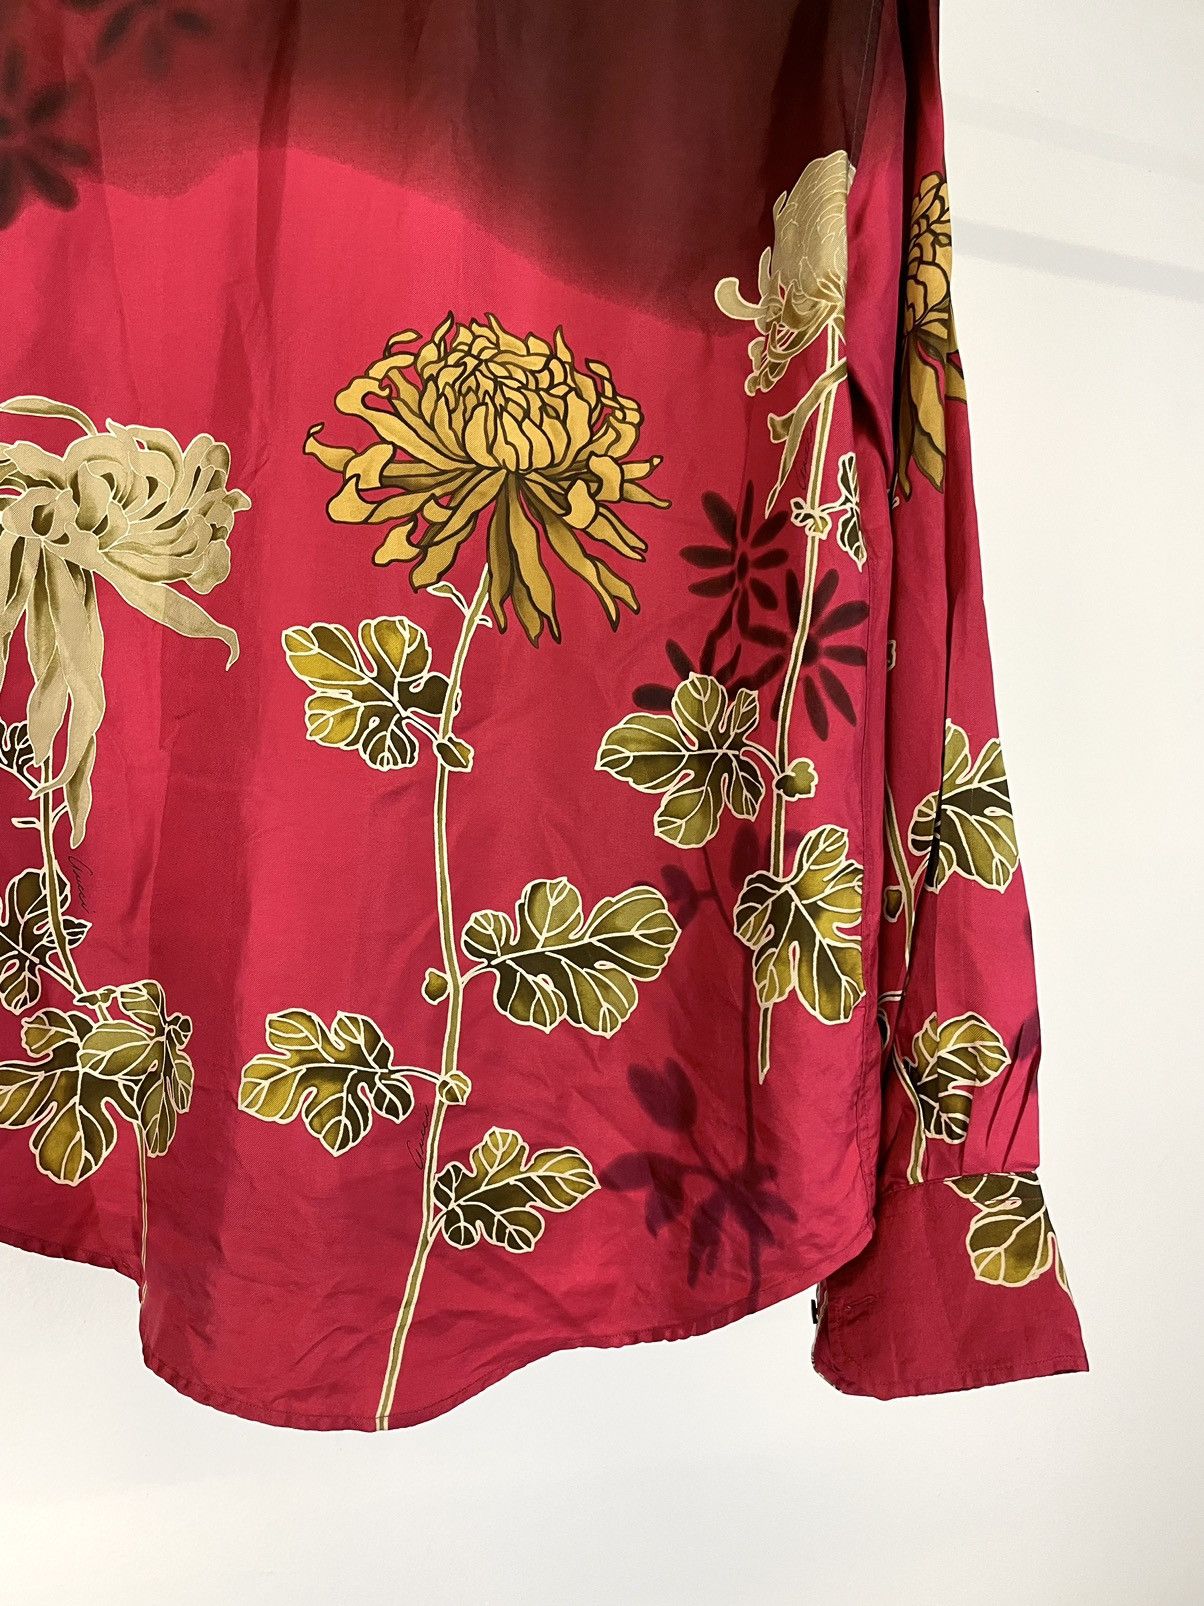 Gucci SS2001 Tom Ford Chrysanthemum floral Print Silk Shirt rare Size US M / EU 48-50 / 2 - 5 Thumbnail